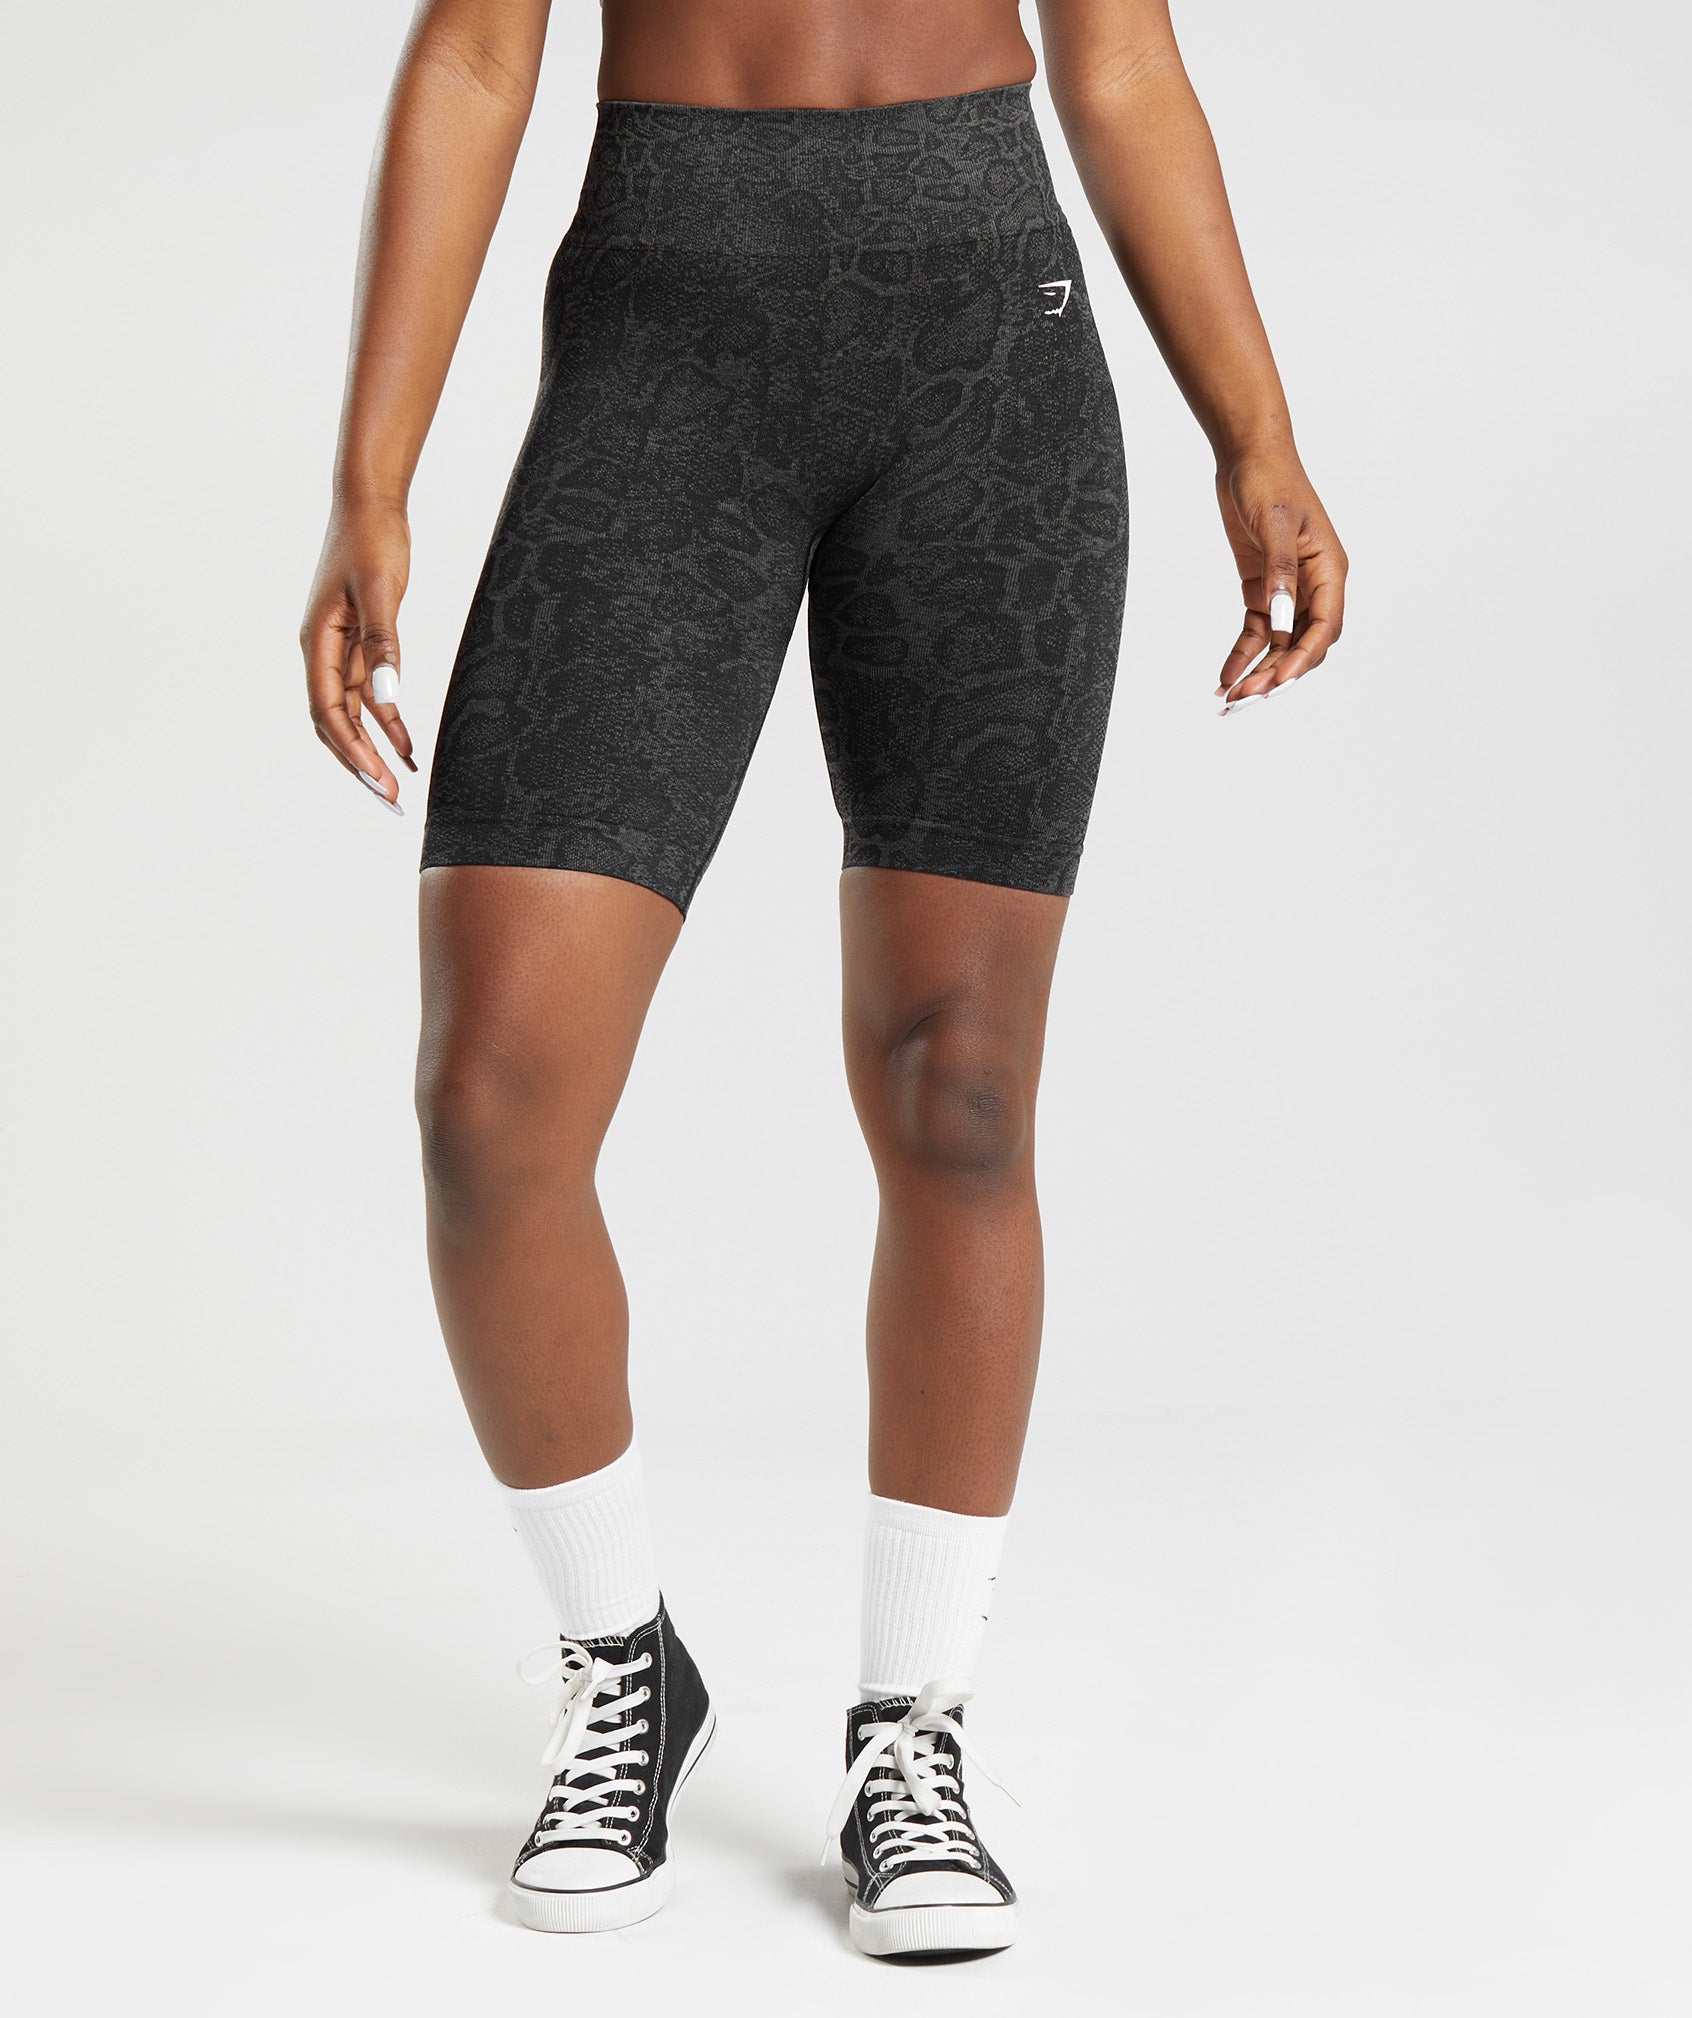 Women's Black Gym Shorts & Sports Shorts – Gymshark